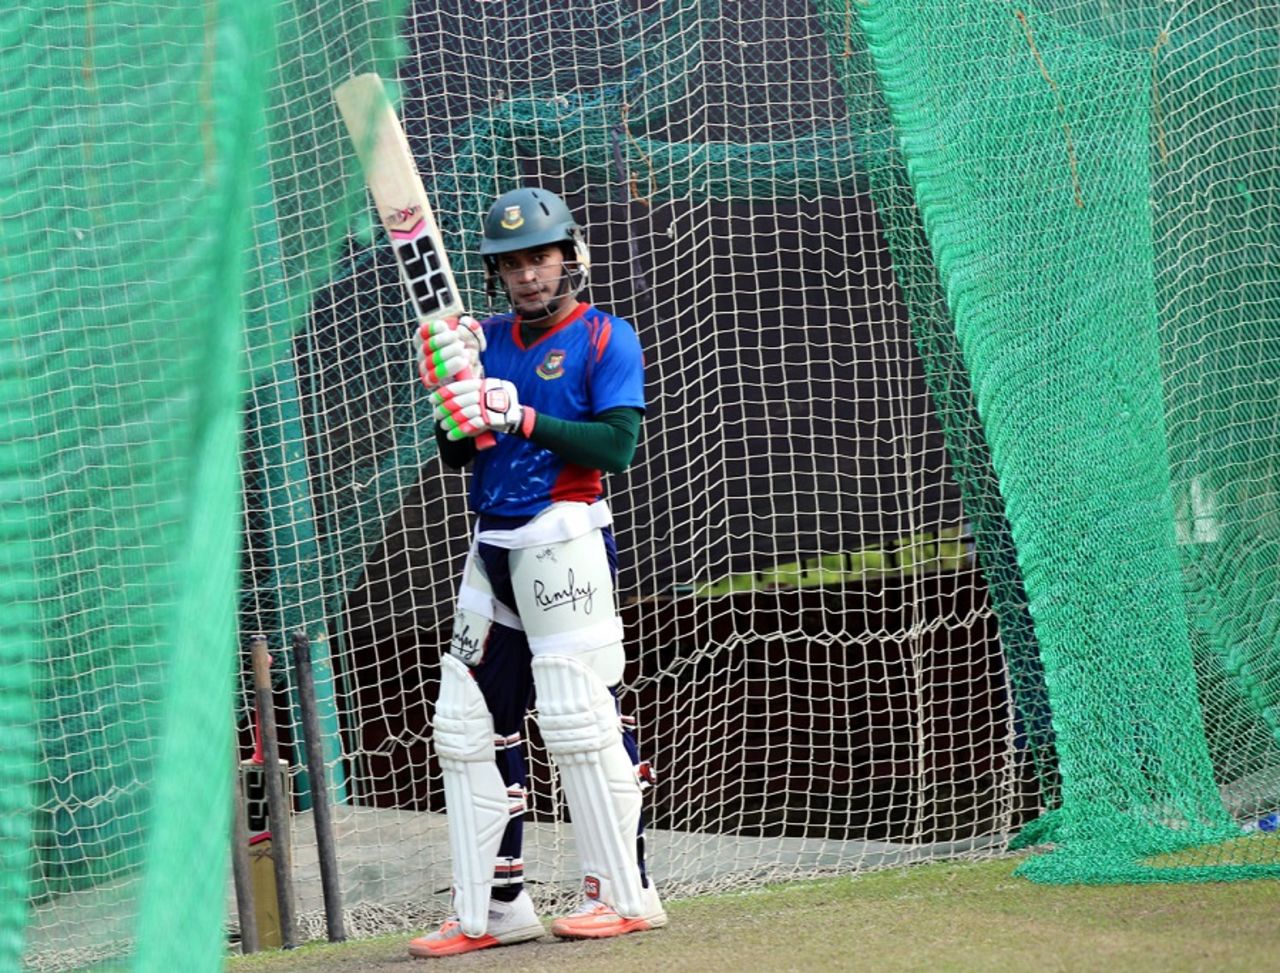 Mushfiqur Rahim prepares to bat in the nets, Mirpur, May 4, 2015